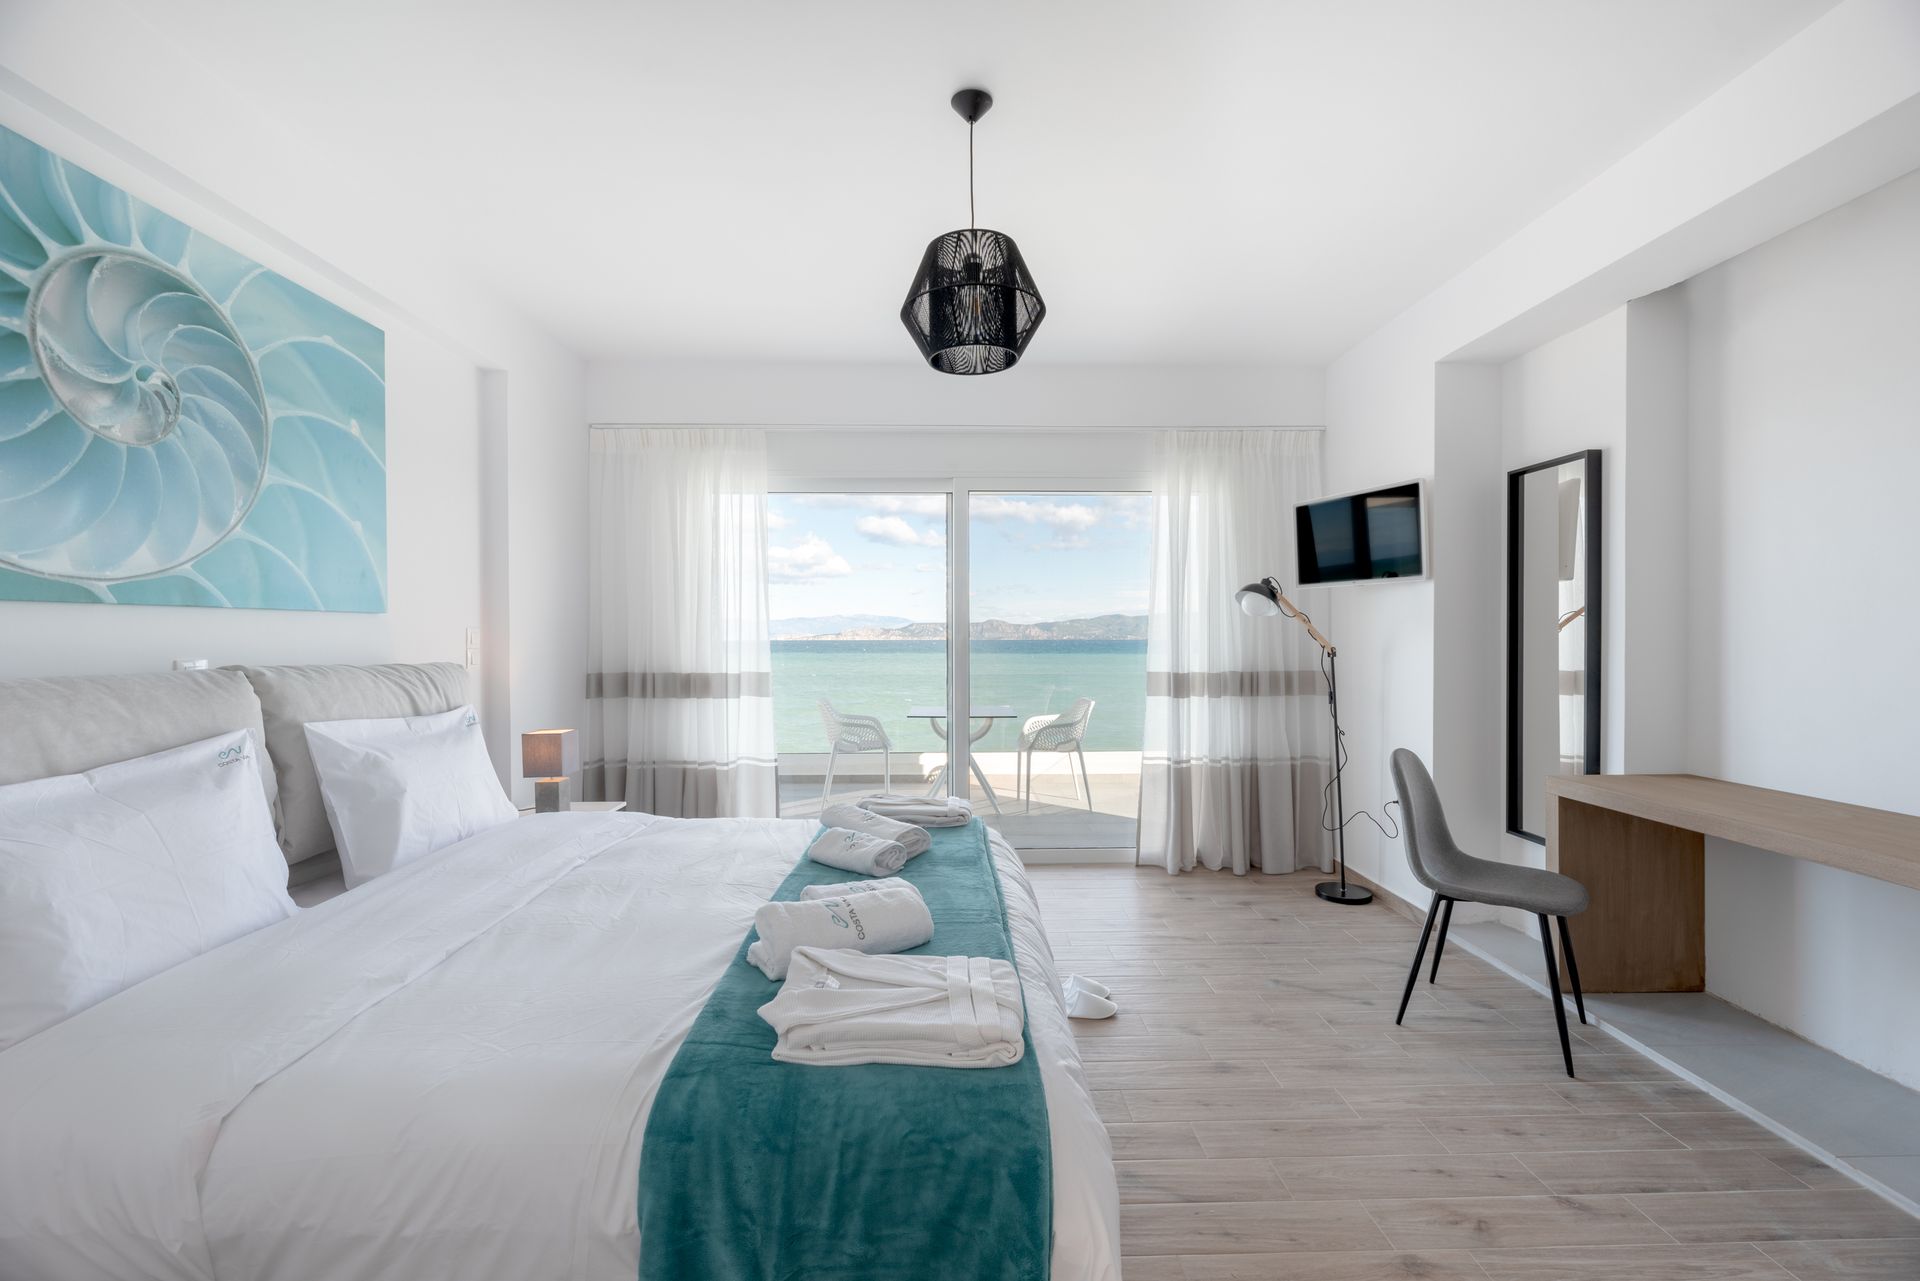 Costa Vasia Suites & Apartments - Βραχάτι Κορινθίας ✦ 2 Ημέρες (1 Διανυκτέρευση) ✦ 4 άτομα ✦ 1 ✦ έως 30/04/2023 ✦ Κοντά σε Παραλία!